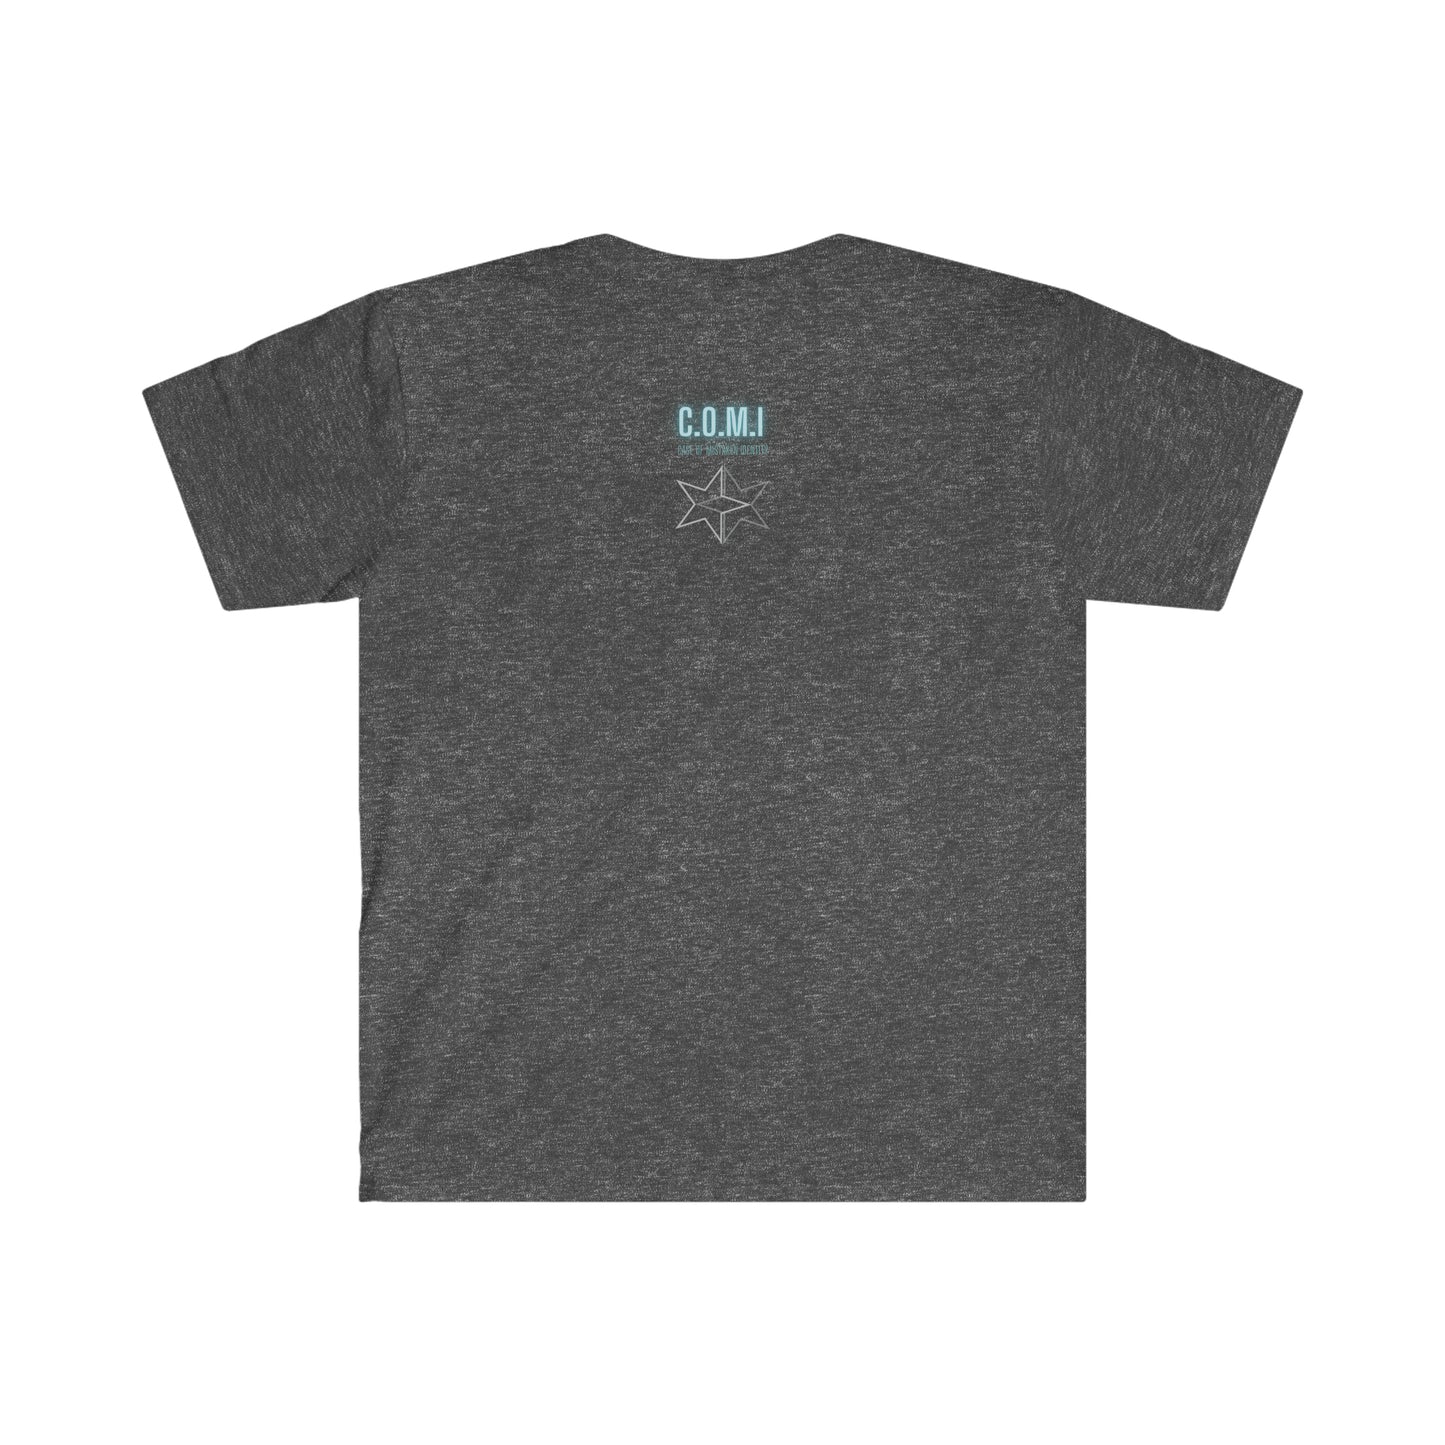 Hazzard 2 - Unisex Softstyle T-Shirt